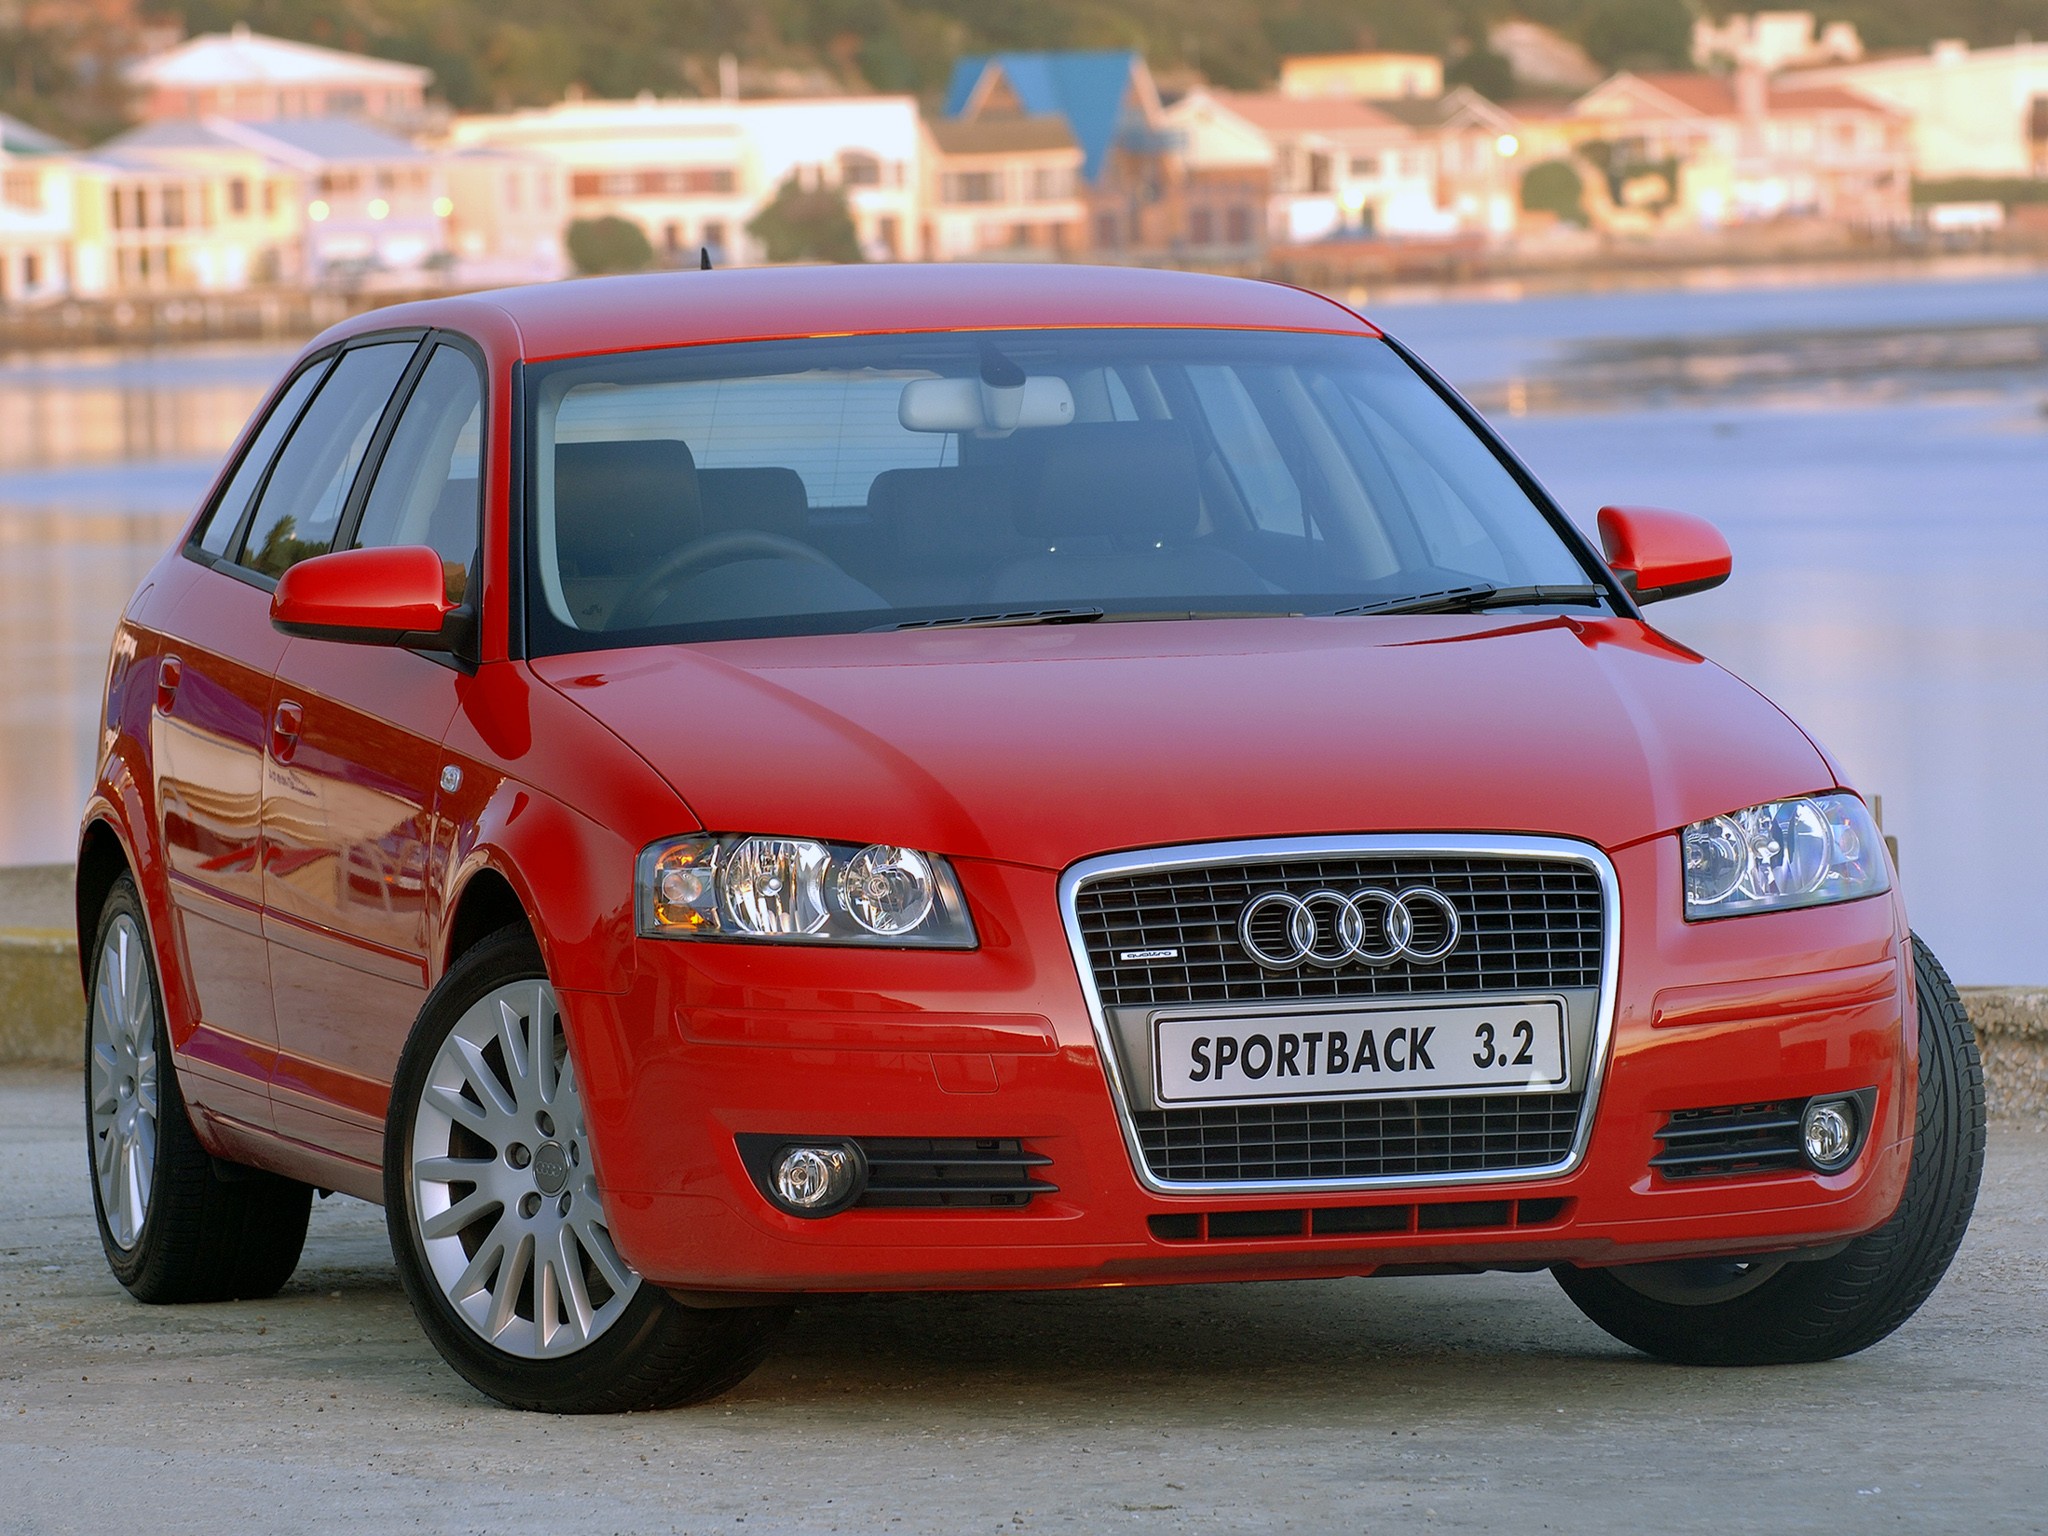 Audi A3 Sportback S-line (2004) - pictures, information & specs